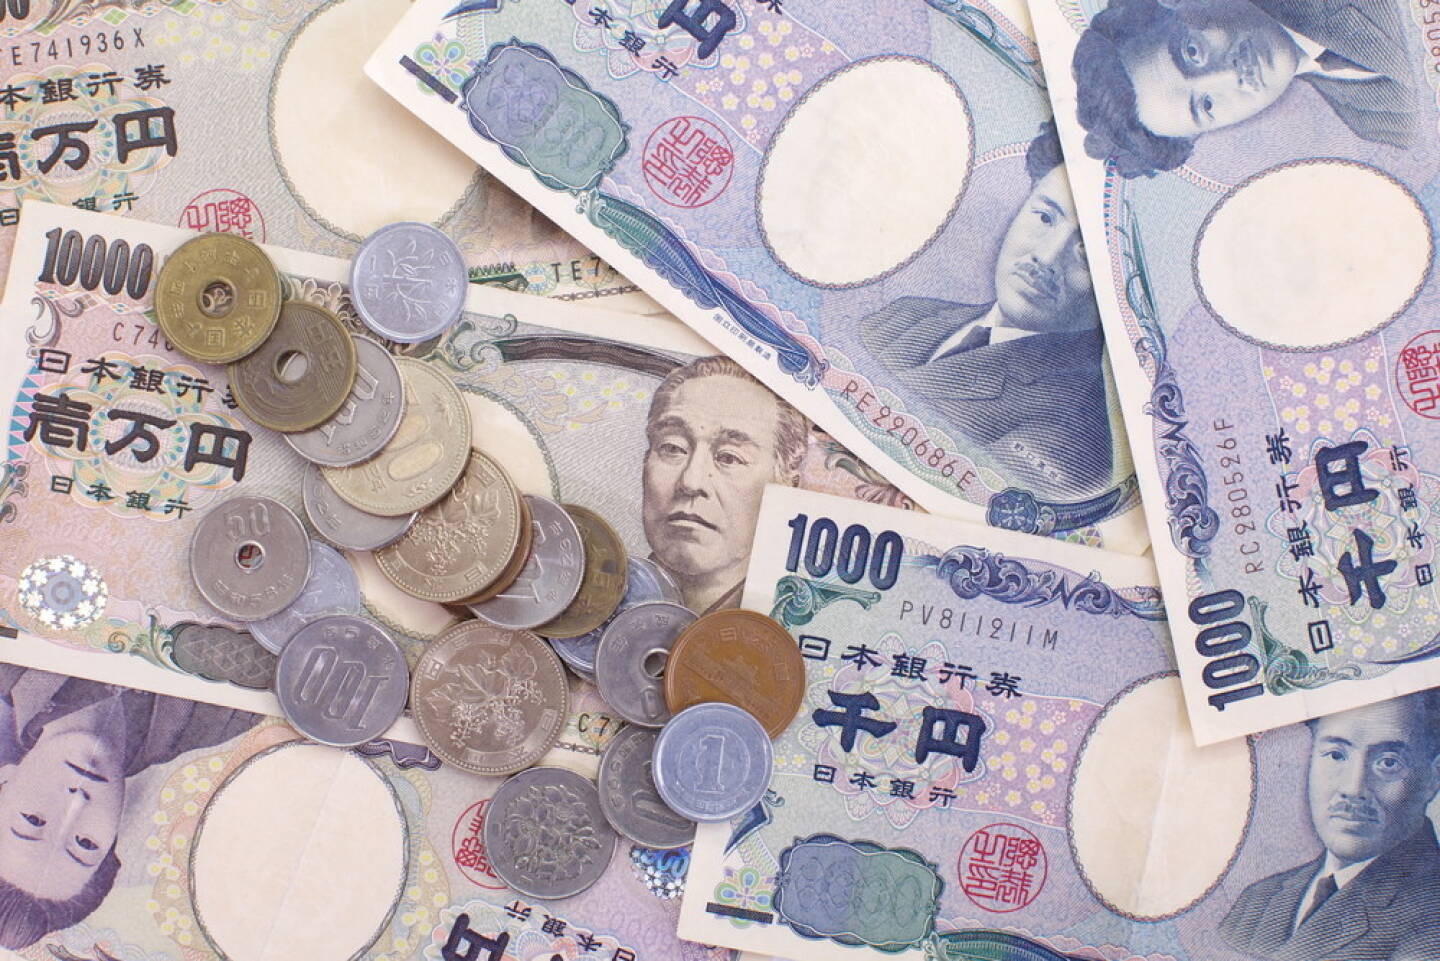 Yen Japan Tokio http://www.shutterstock.com/de/pic-164166002/stock-photo-japanese-yen-notes-currency-of-japan.html (Bild: www.shutterstock.com)